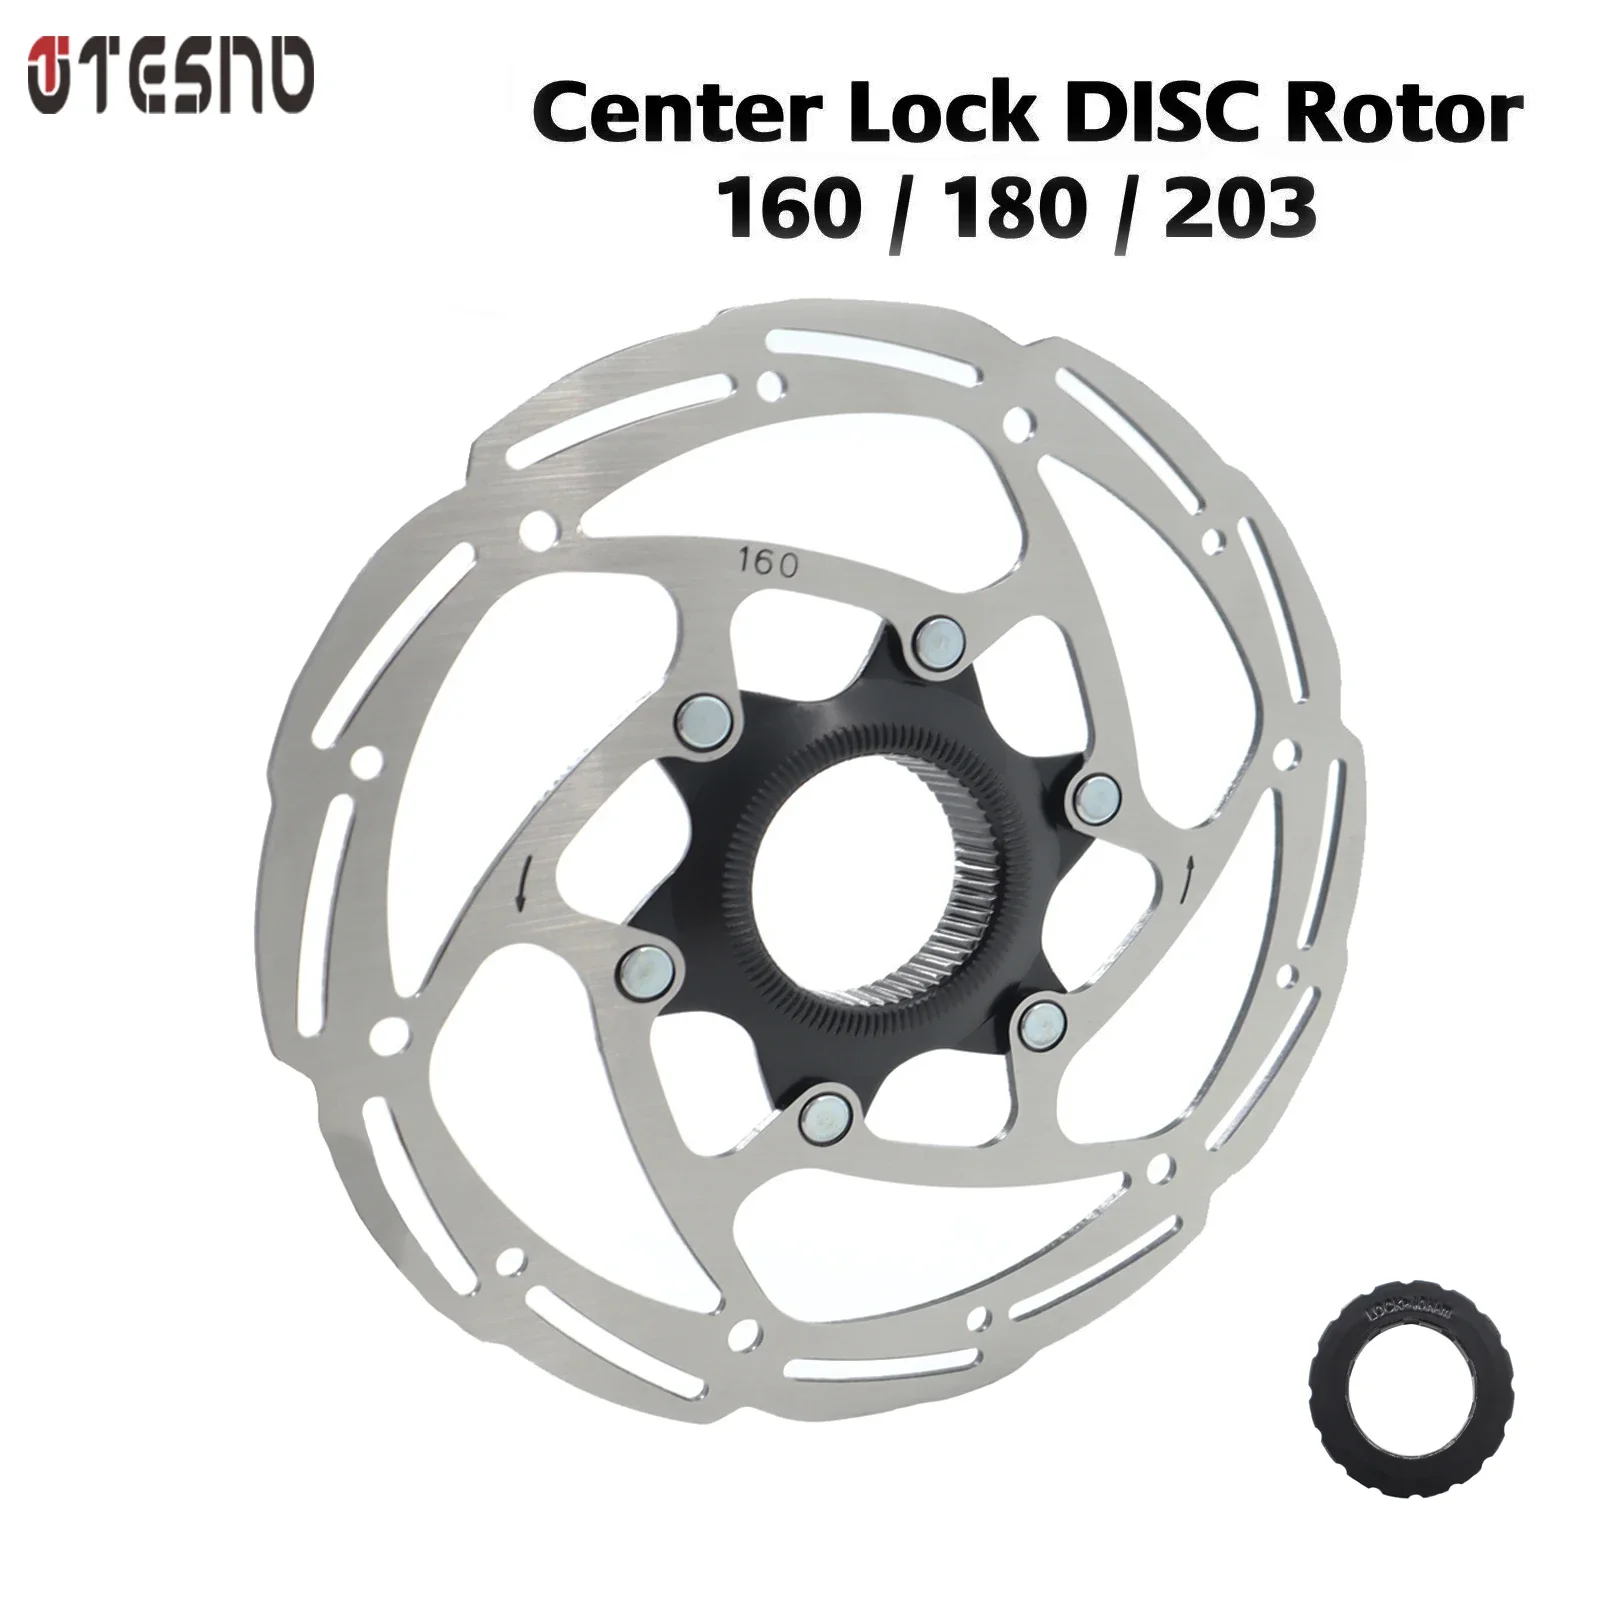 

TESNO MTB Bicycle Hydraulic Brake Disc Centerlock Rotor 160mm 180mm 203mm Center Lock Rotor 1.8mm Thick Road Mountain Bike Parts